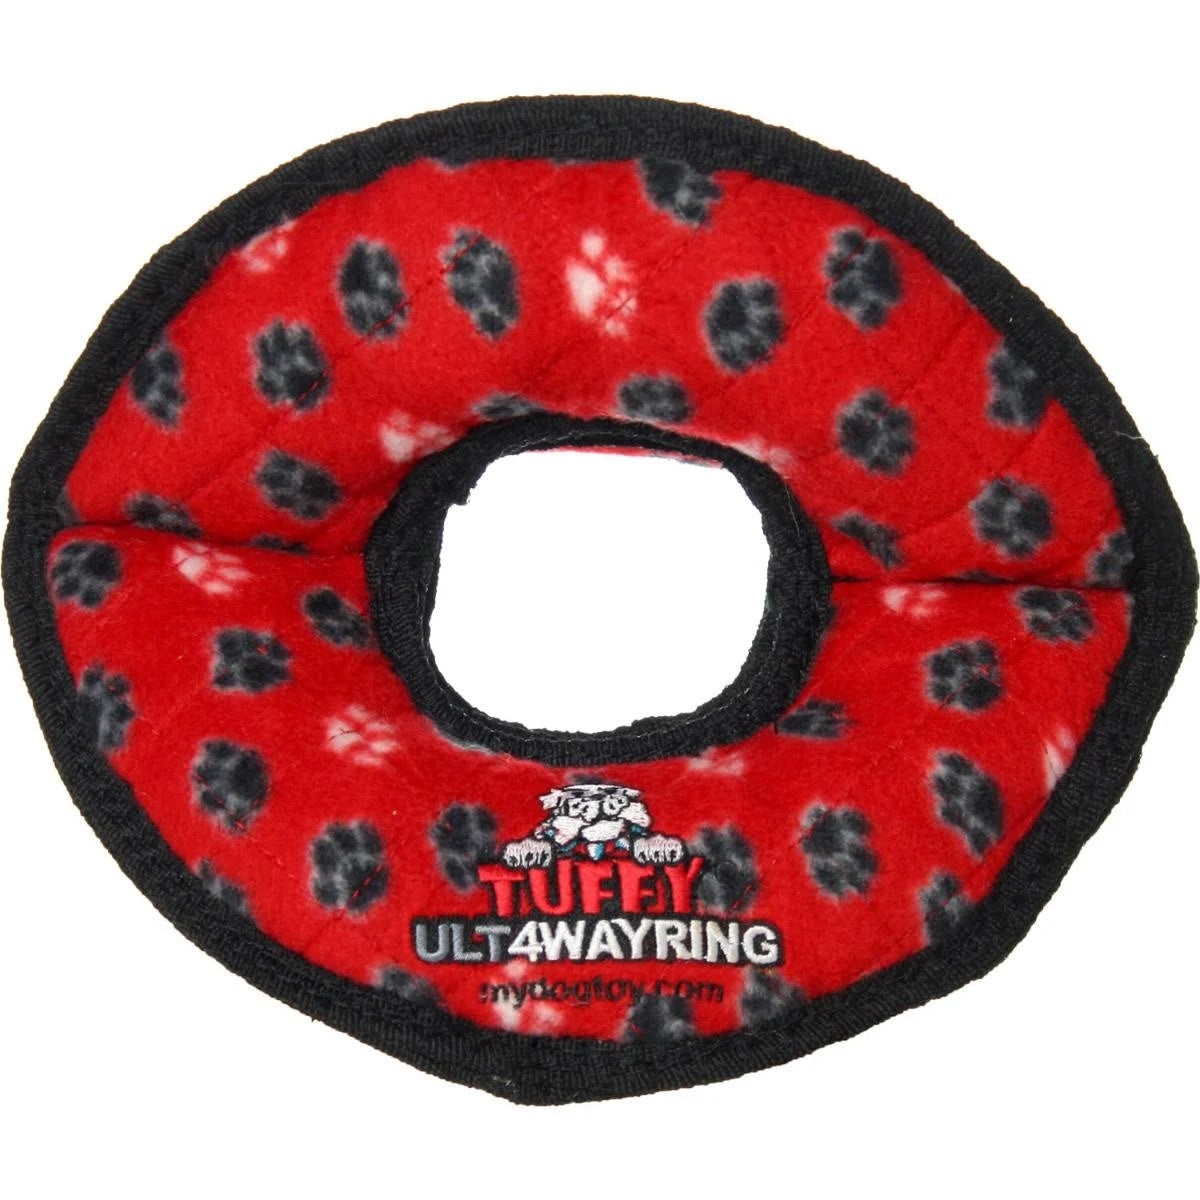 Tuffy Ult 4way Ring Paw Red 180181906411